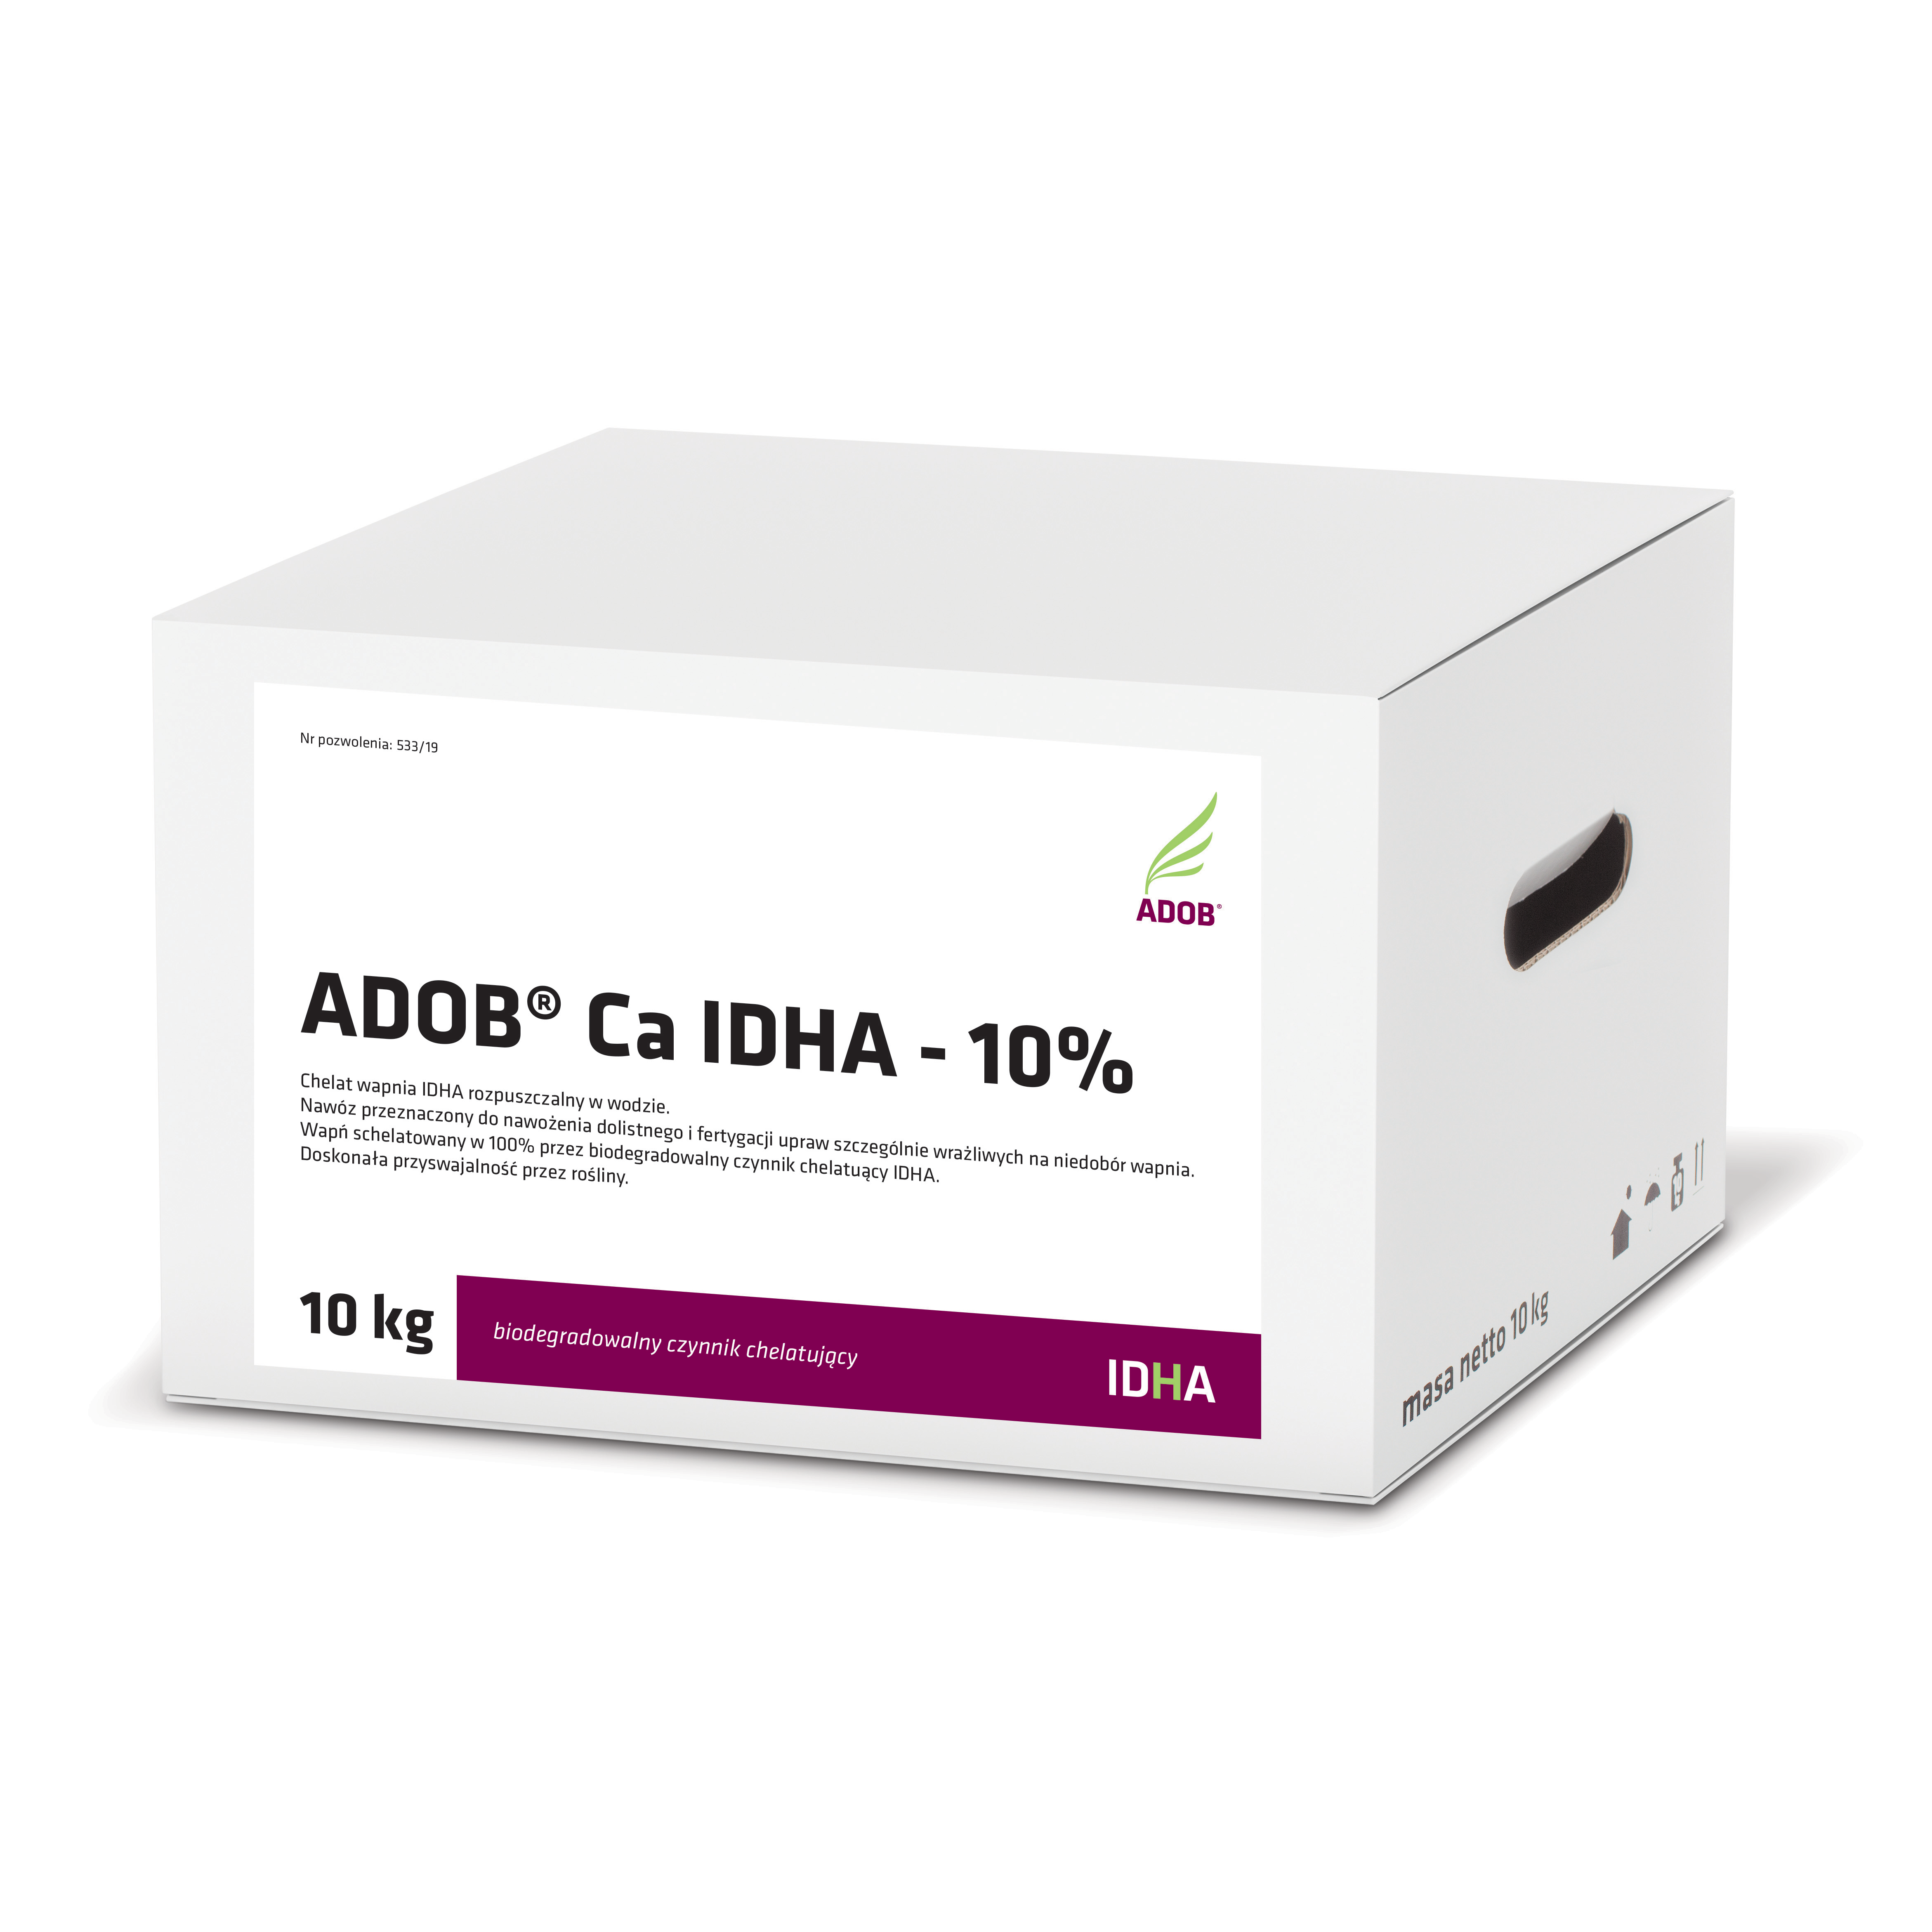 ADOB Ca IDHA – 10%